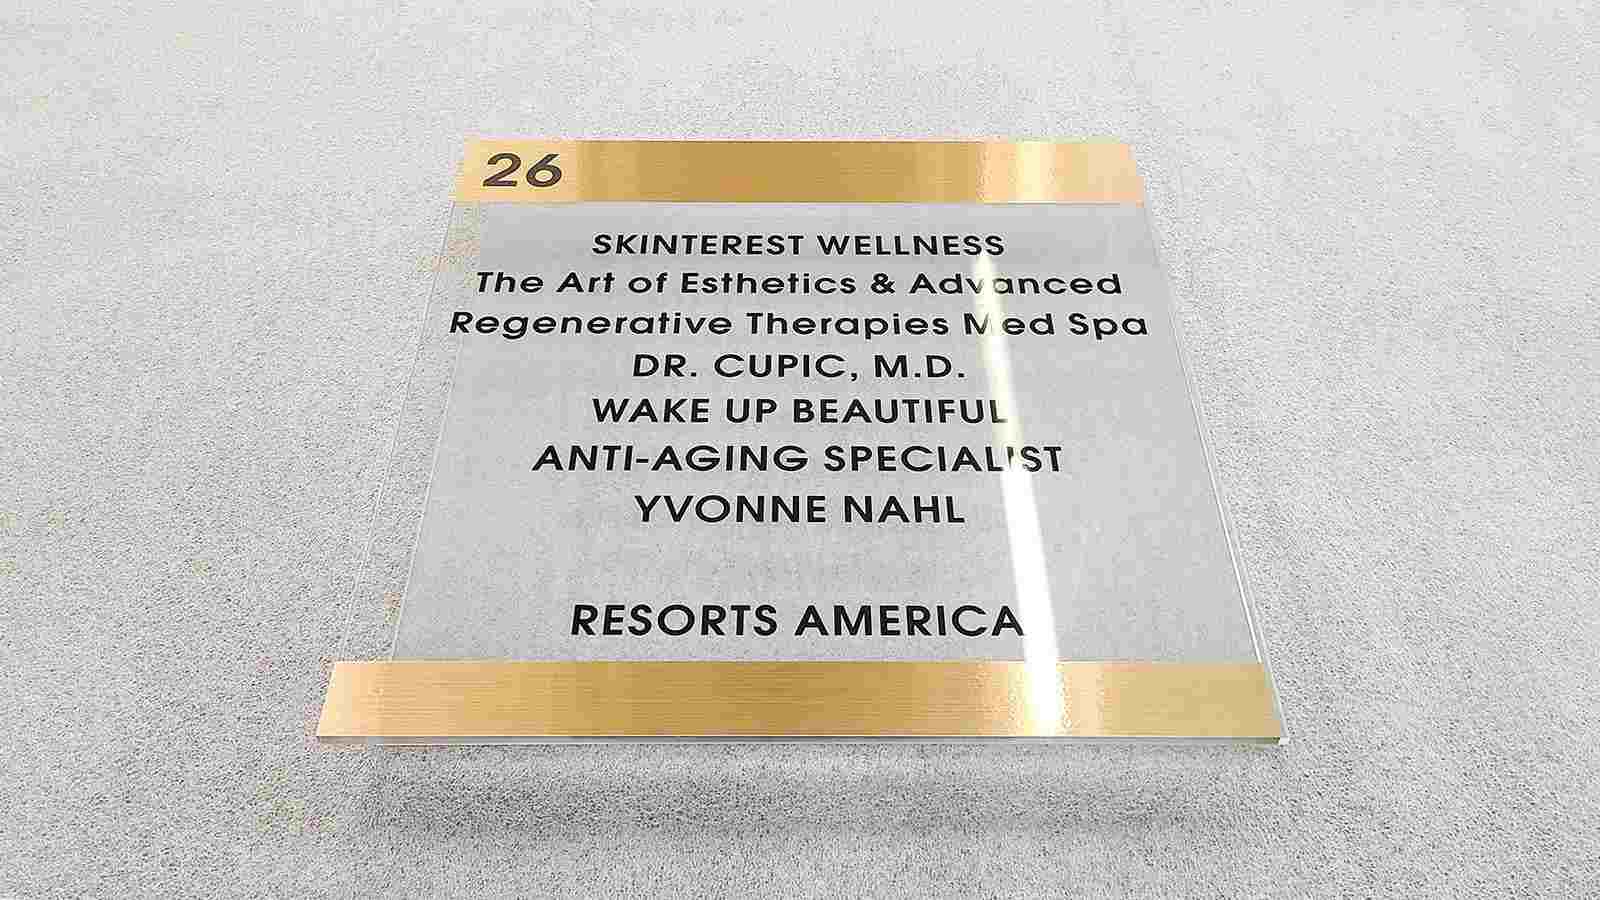 skinterest wellness acrylic business sign